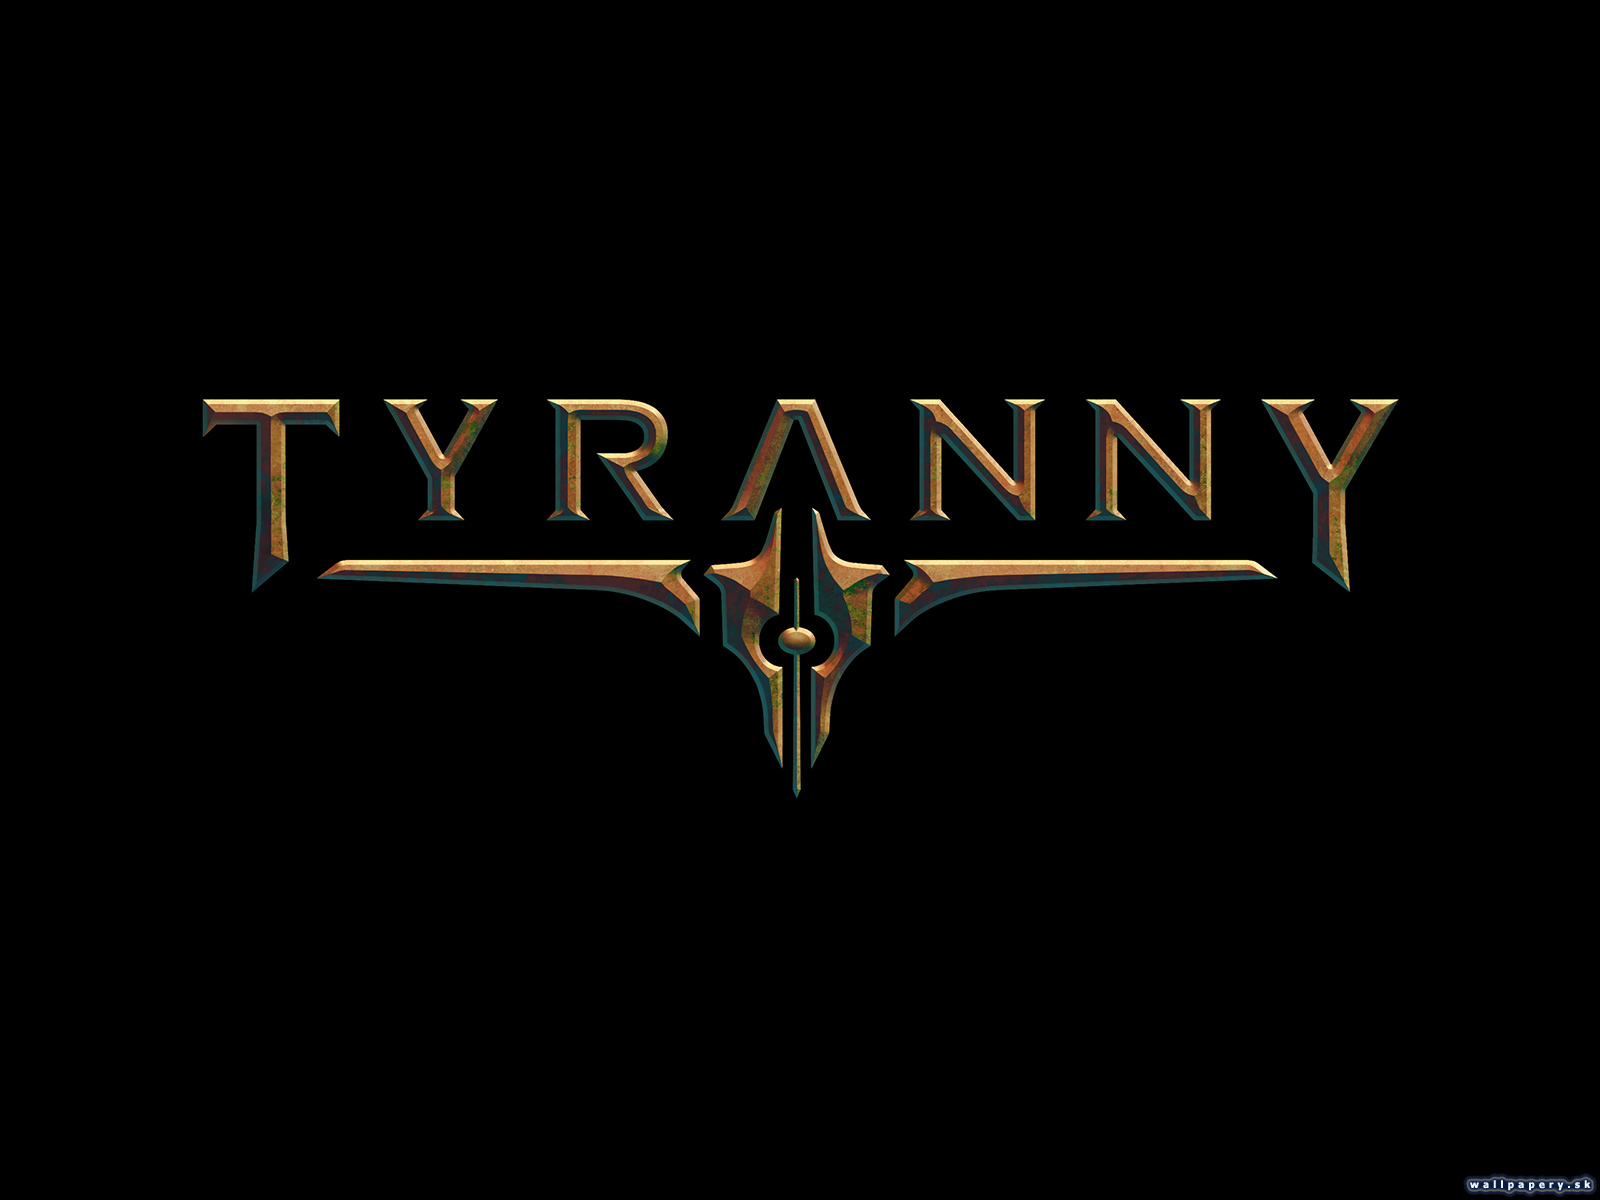 Tyranny - wallpaper 2